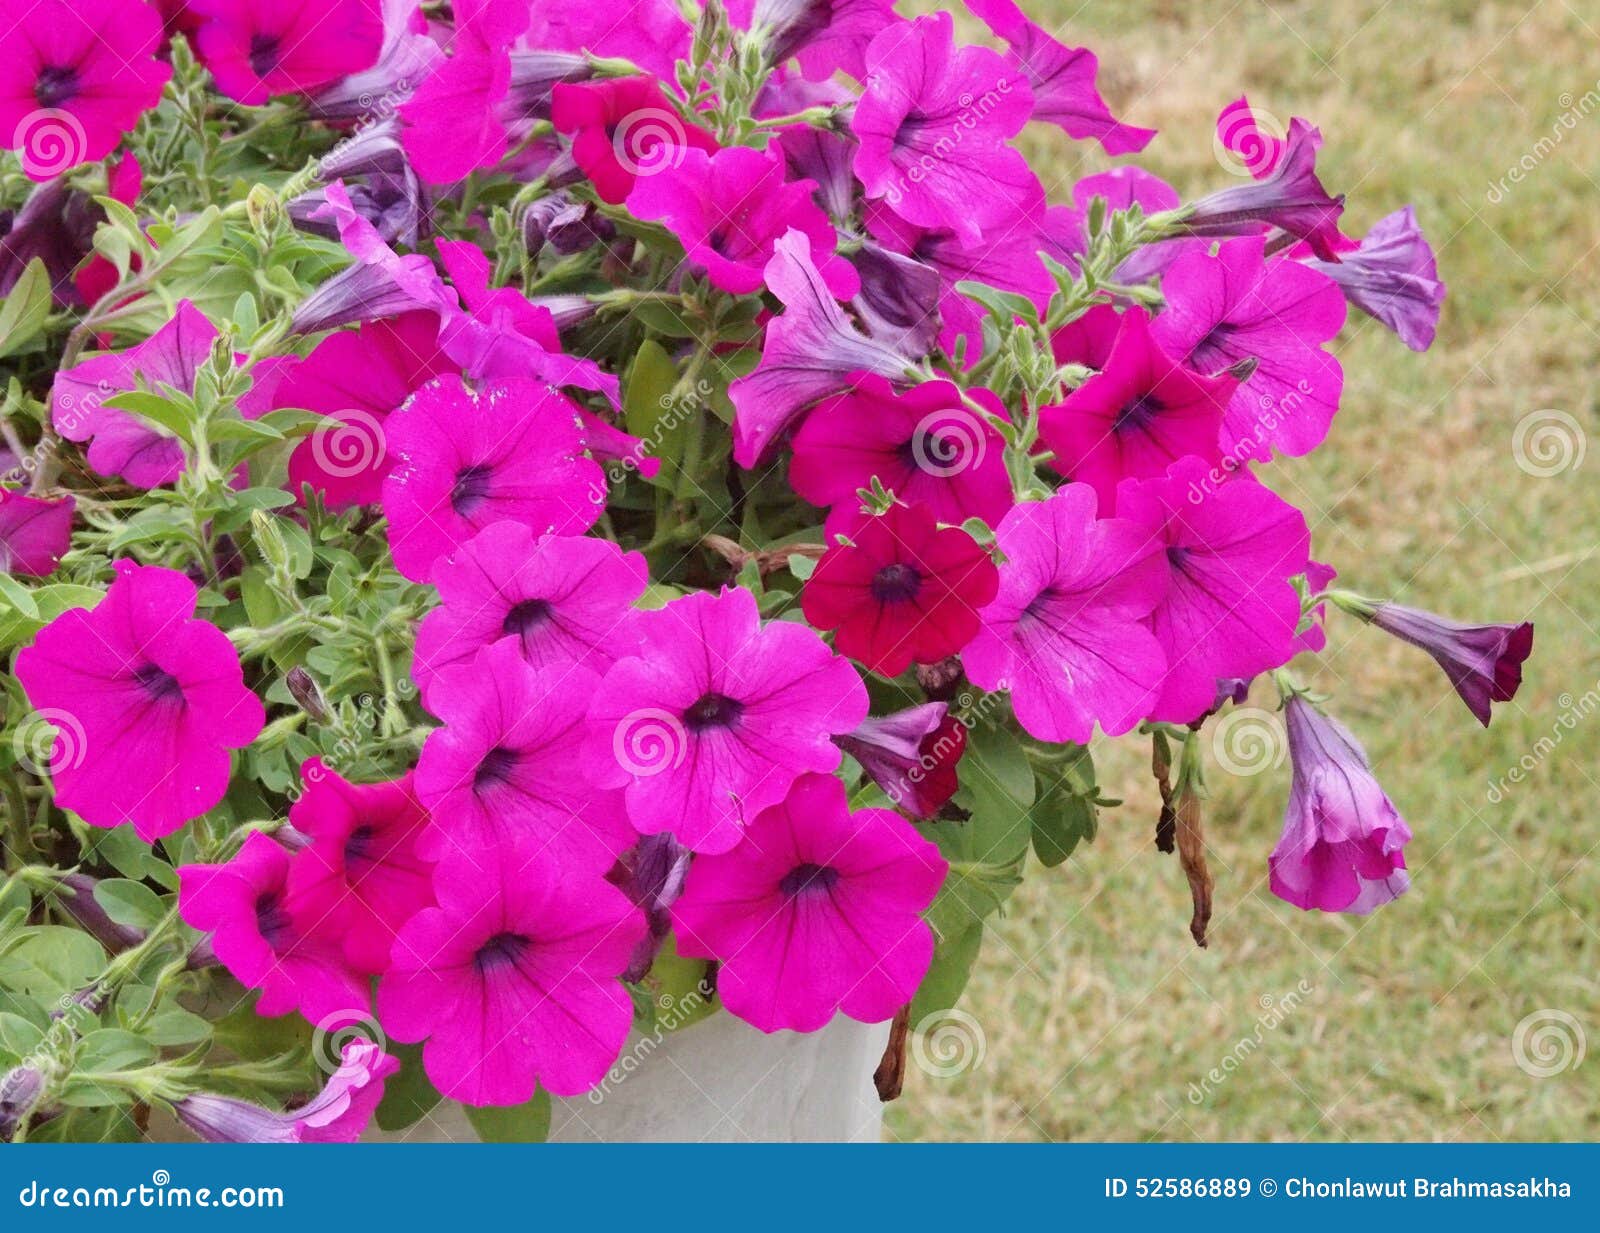 Vilolet flowers stock image. Image of campanula, fresh - 52586889